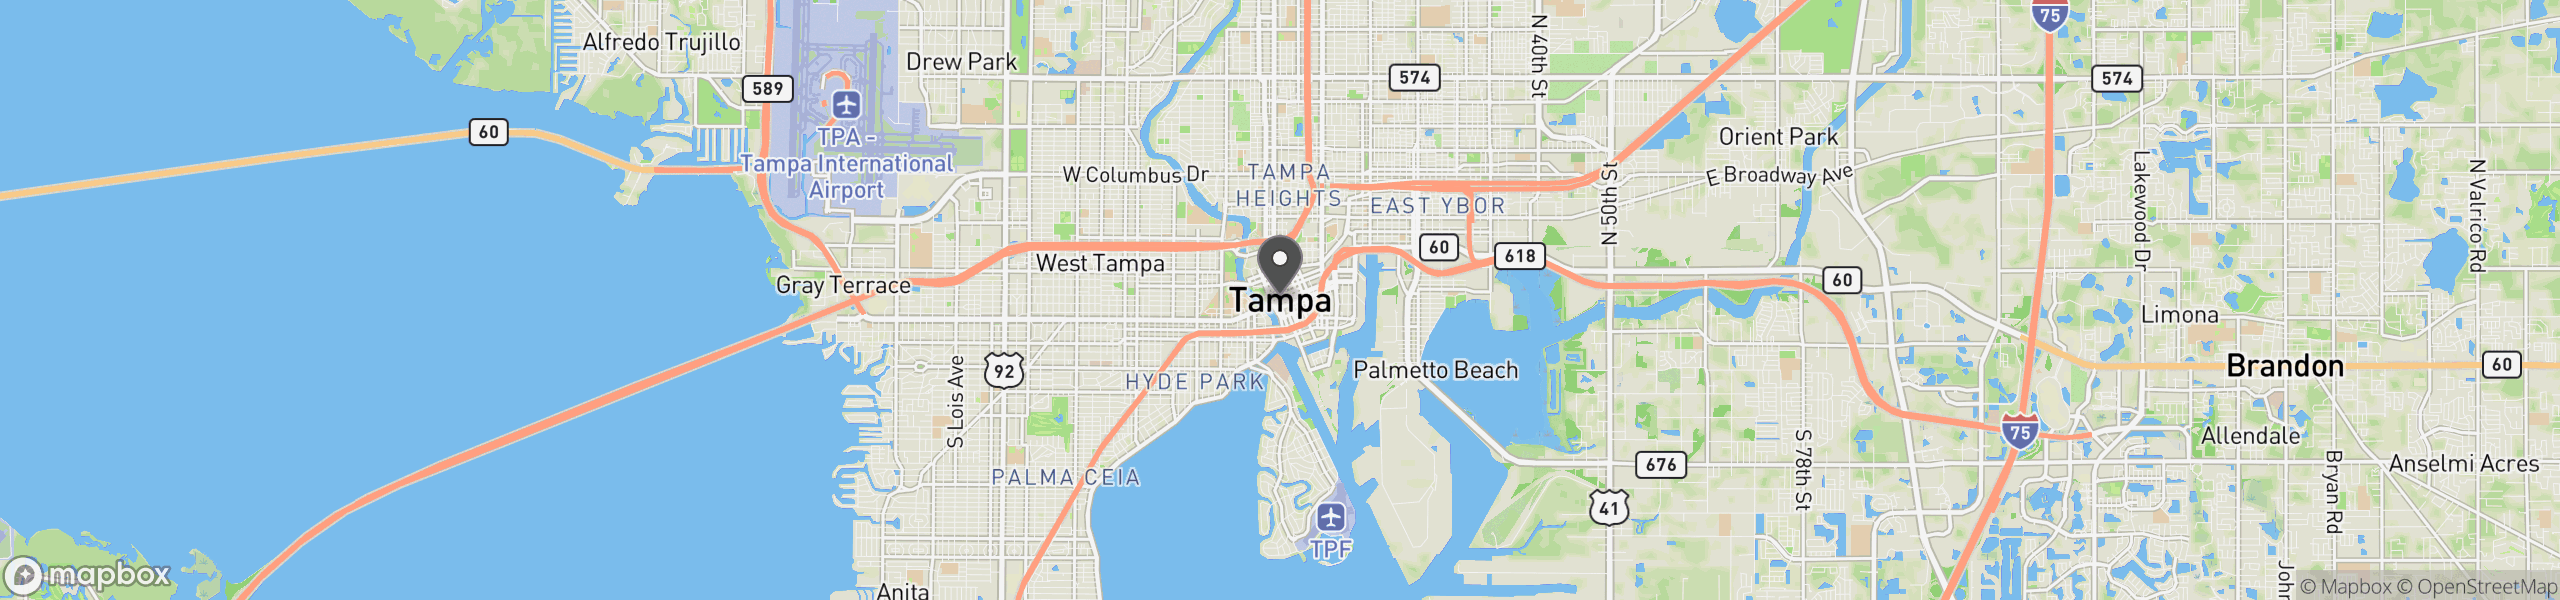 Tampa, FL 33630